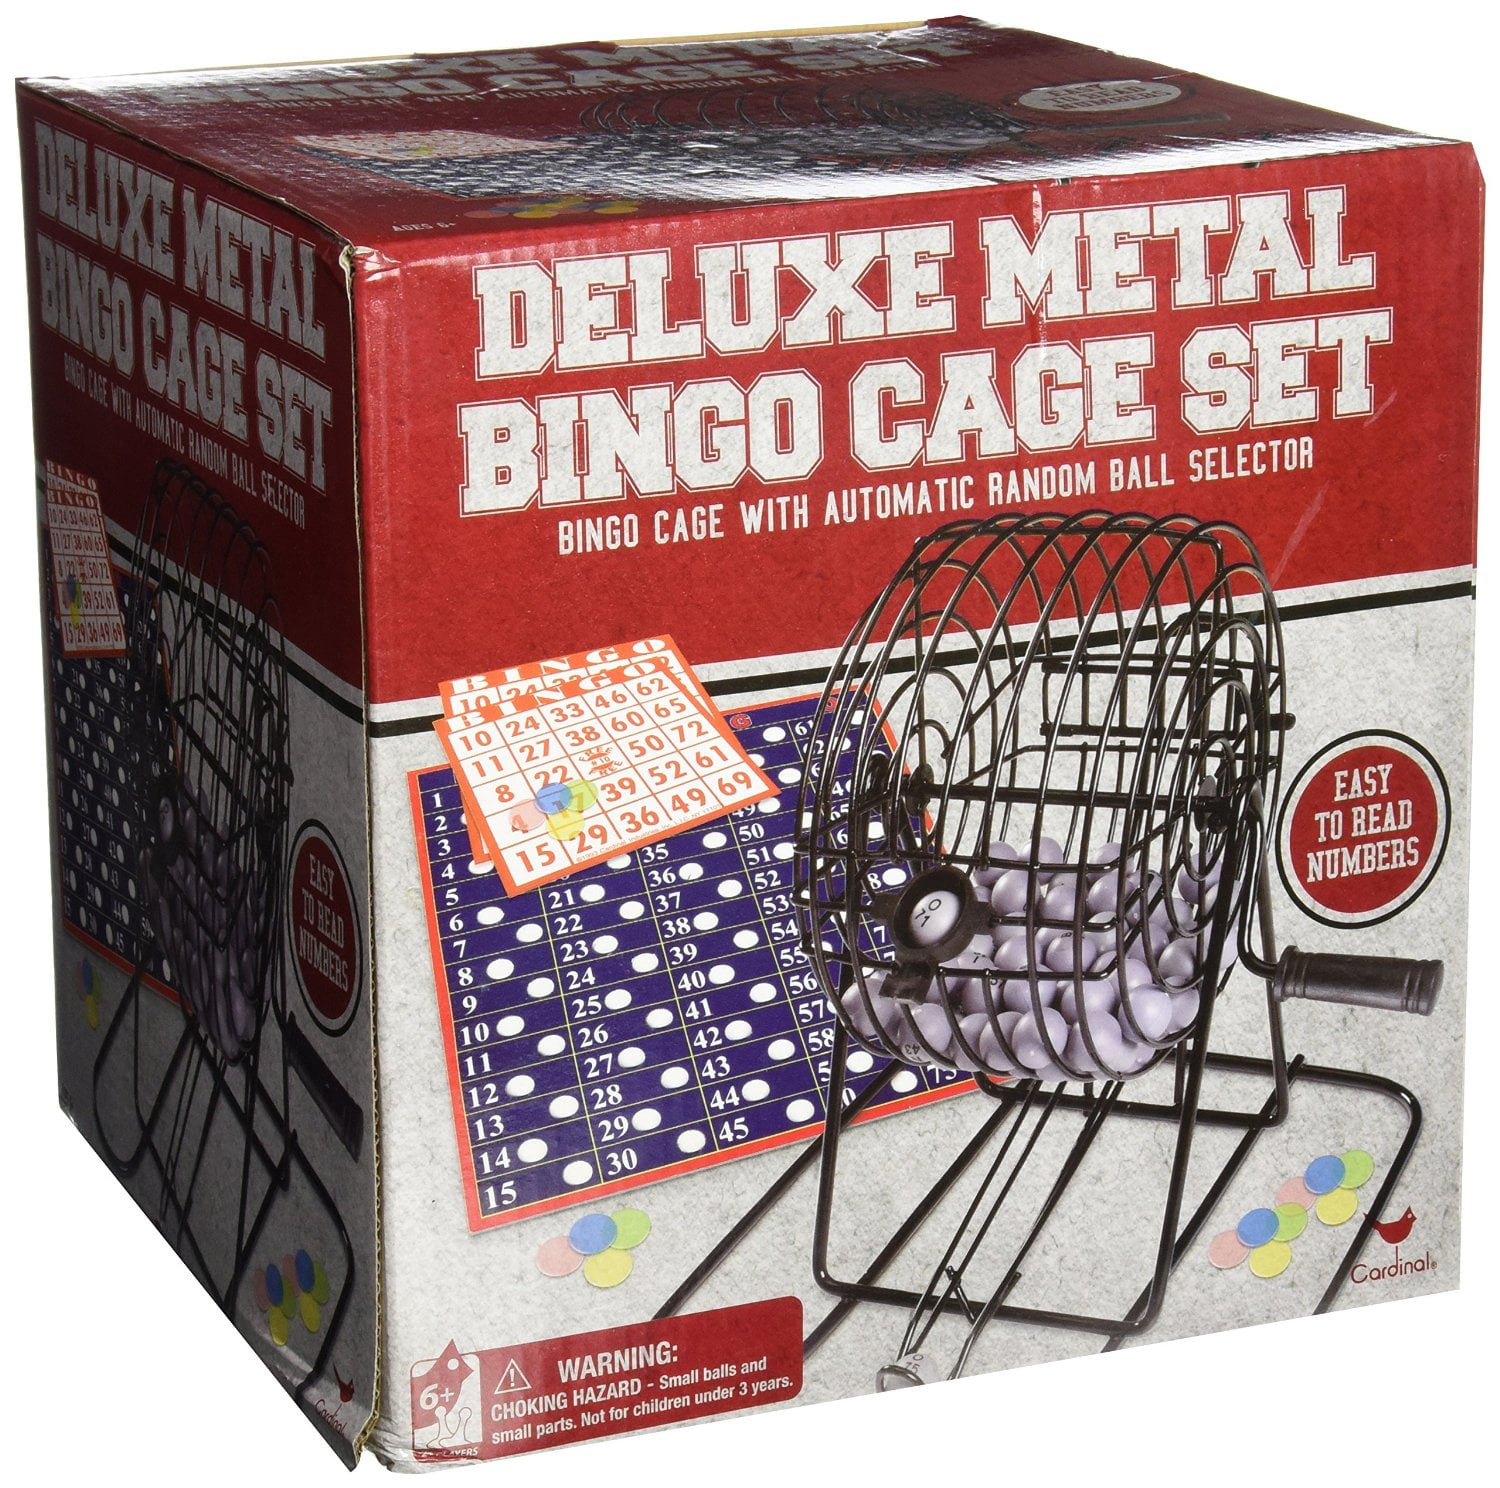 Deluxe Wire Cage Bingo Set (styles will vary)